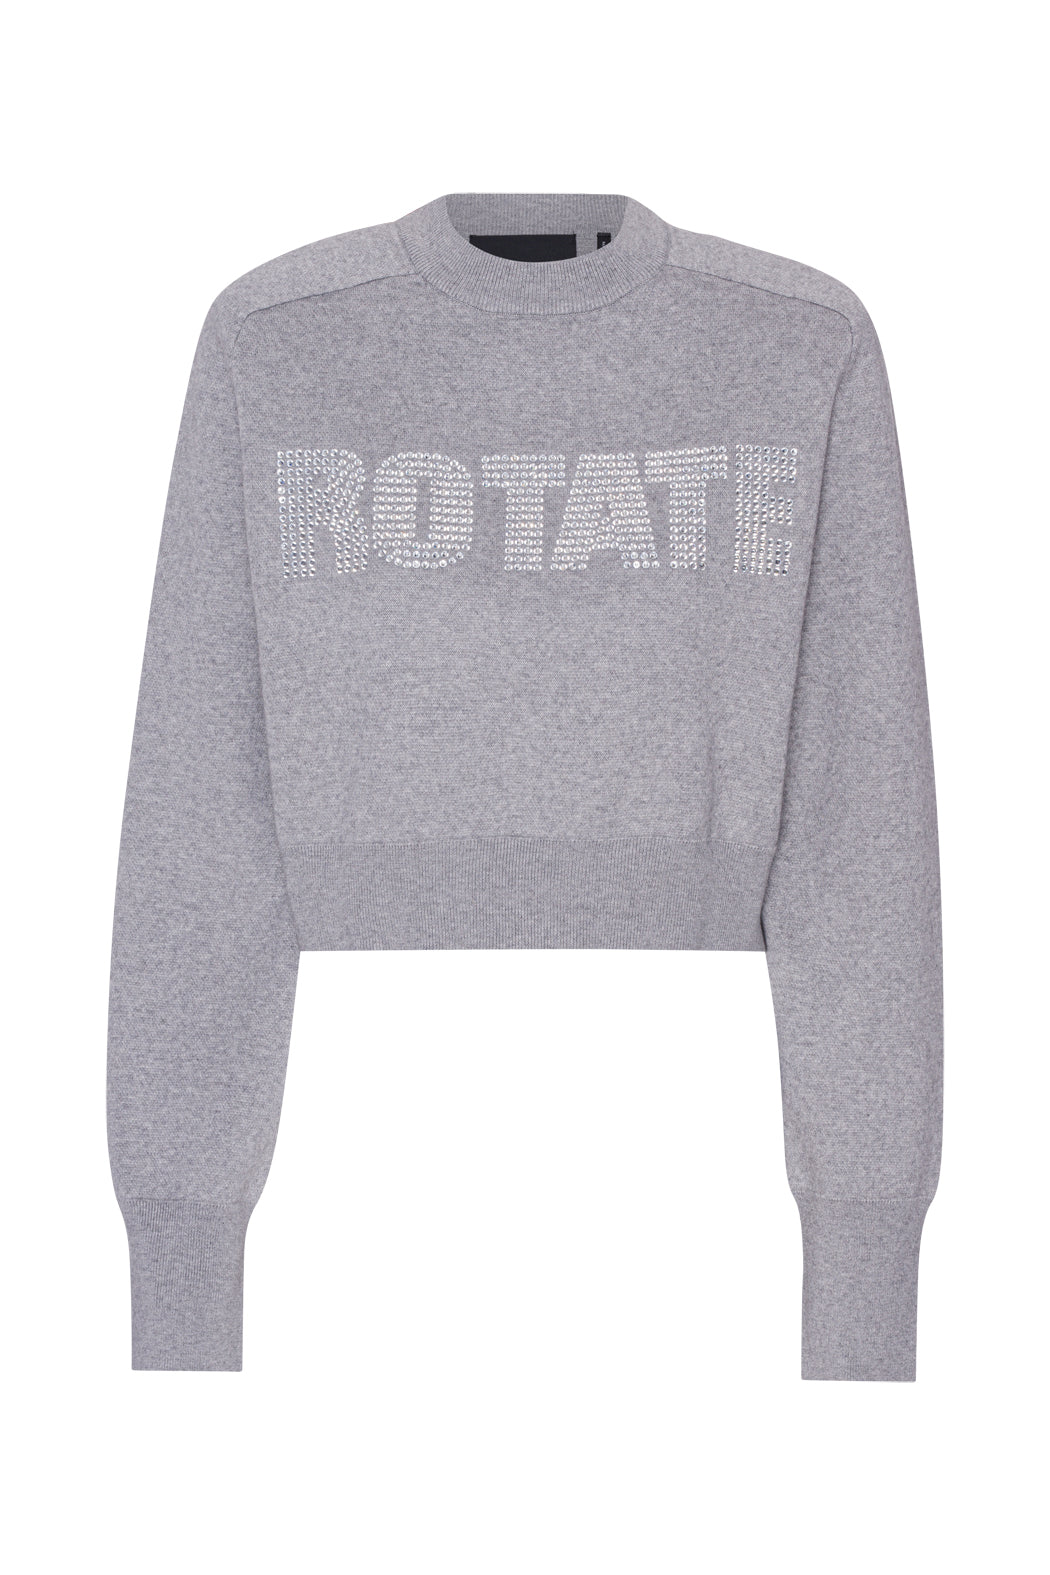 Rotate Firm Knitted Rhinestone Logo Jumper grey